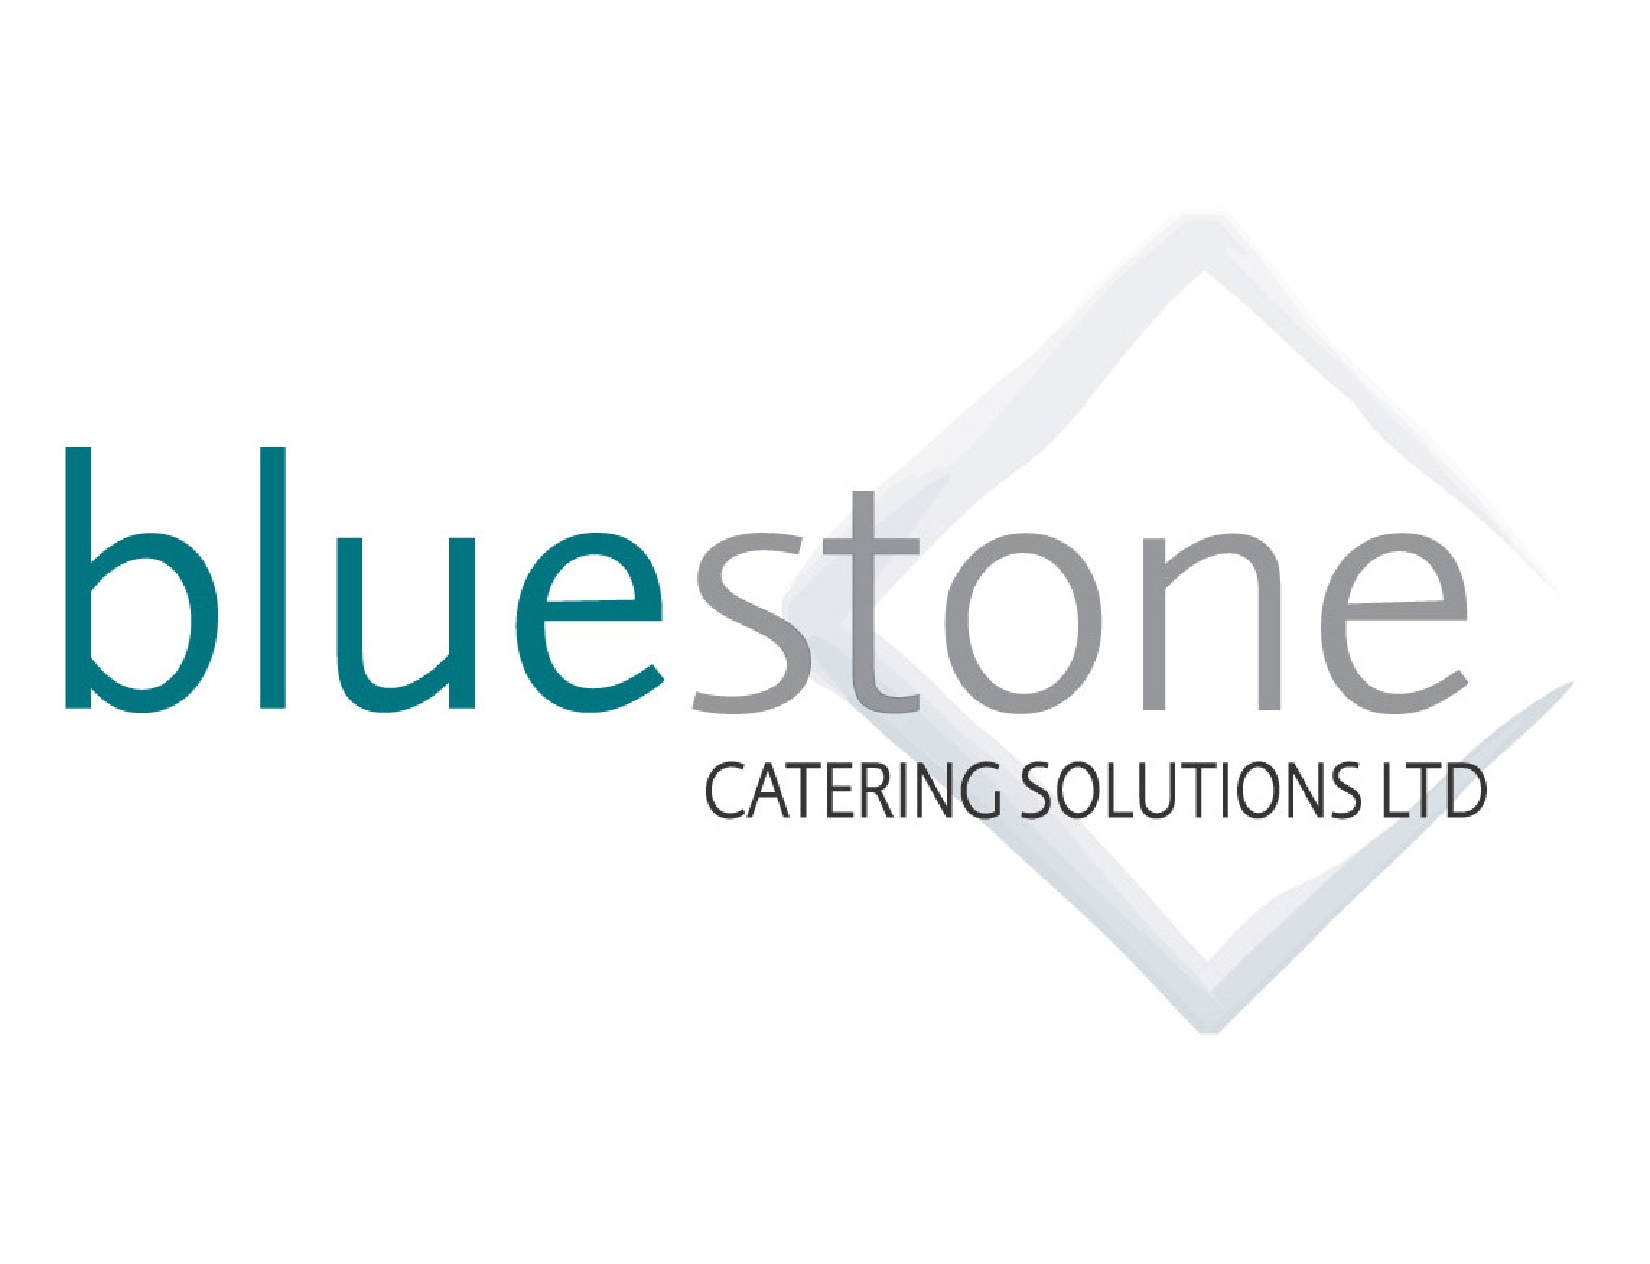 Bluestone Catering Solutions Ltd